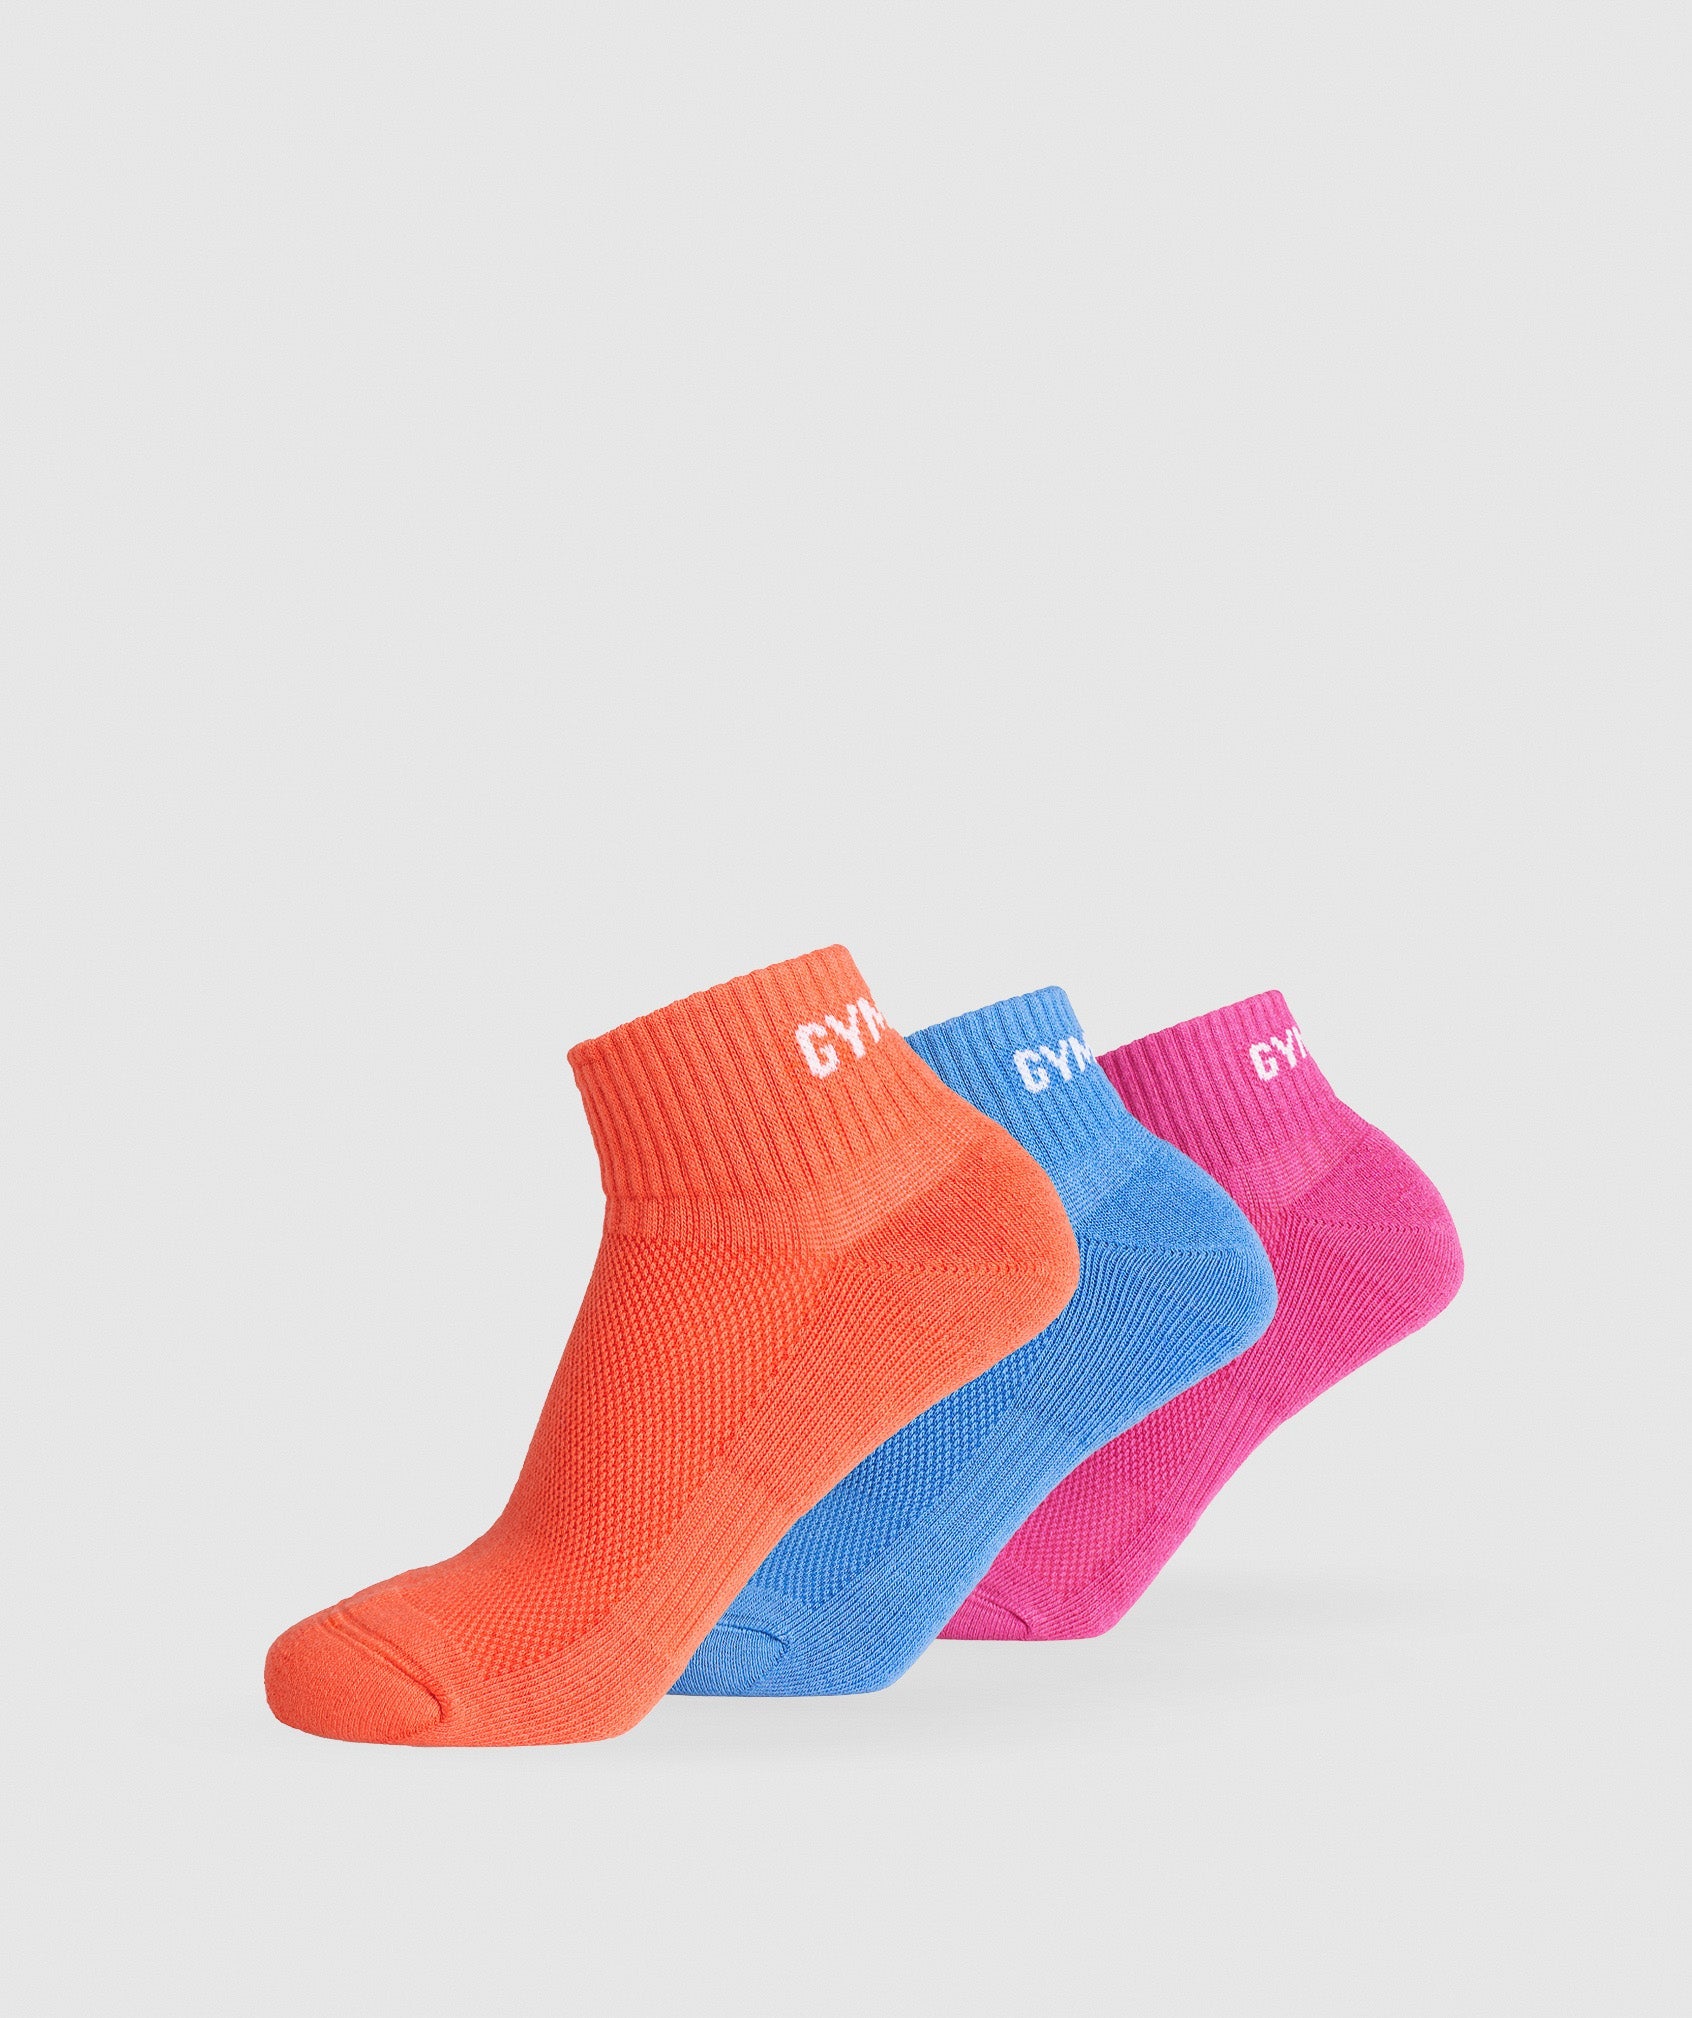 GS Jacquard Quarter Socks 3pk in Wannabe Orange/Lats Blue/Valley Pink